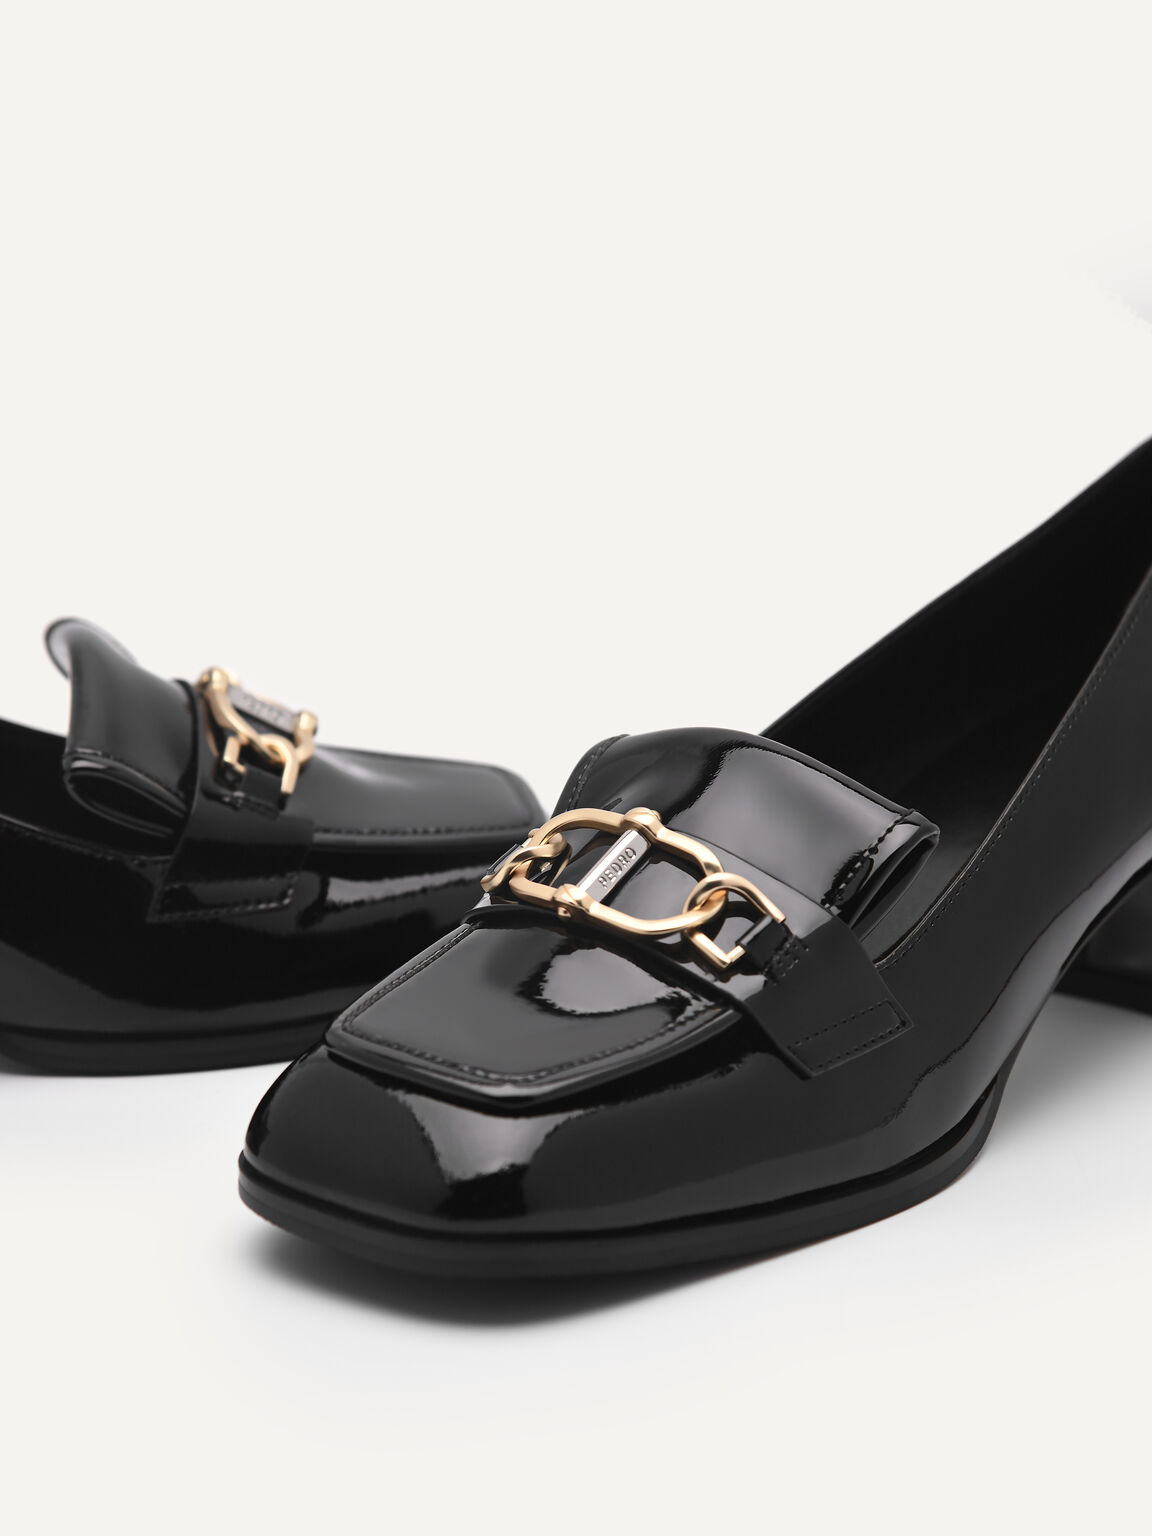 Jean Leather Heels, Black